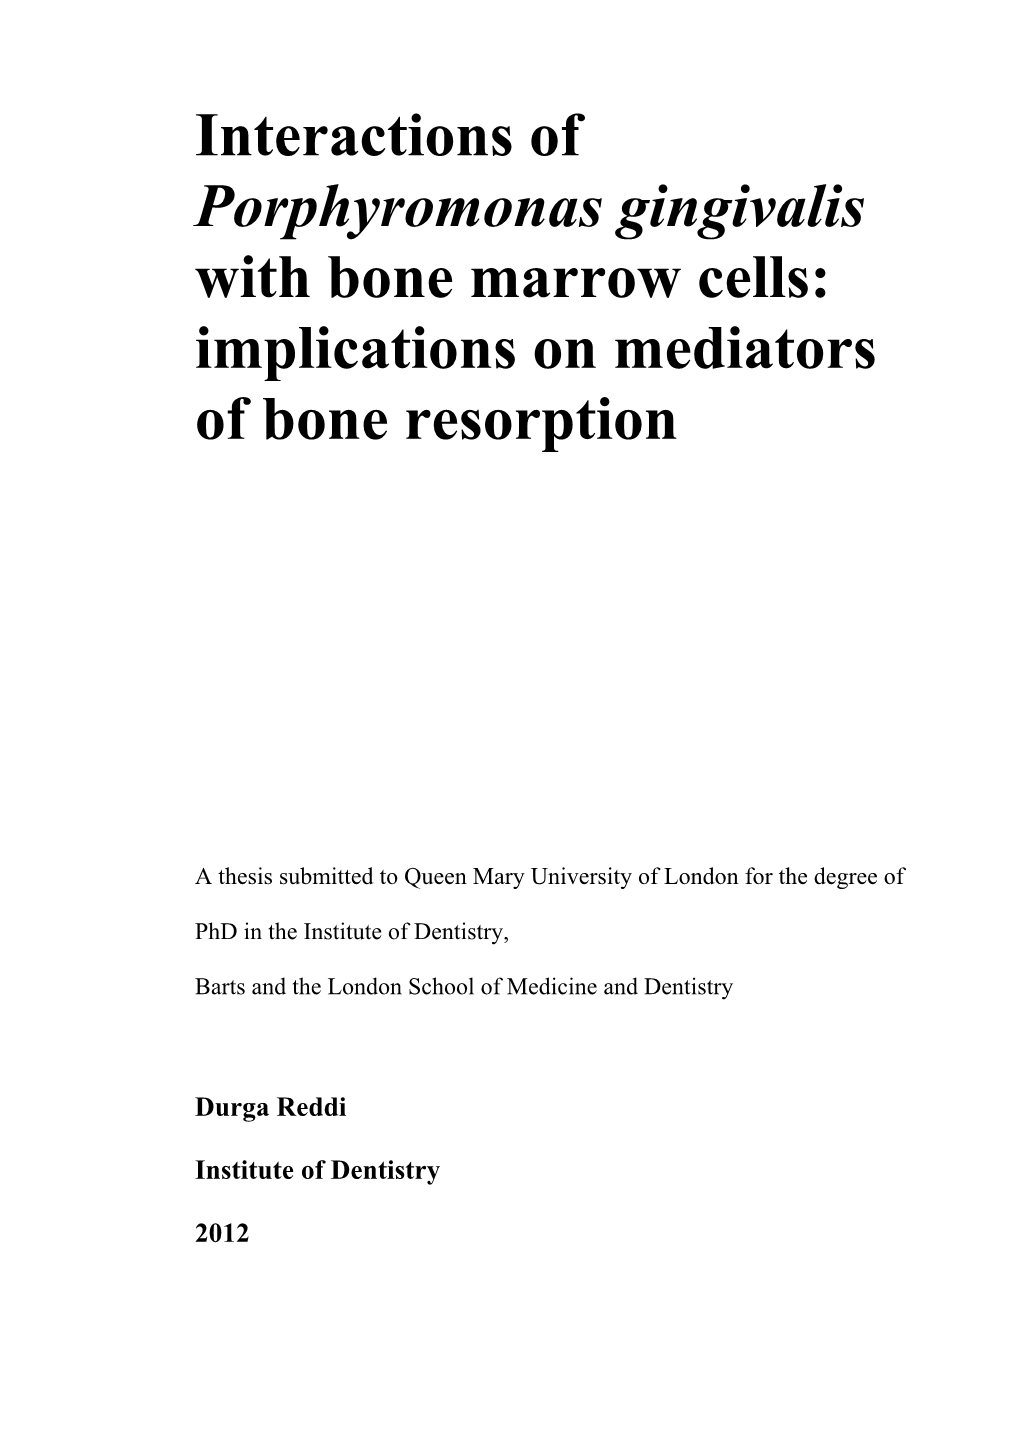 Interactions of Porphyromonas Gingivalis with Bone Marrow Cells: Implications on Mediators of Bone Resorption